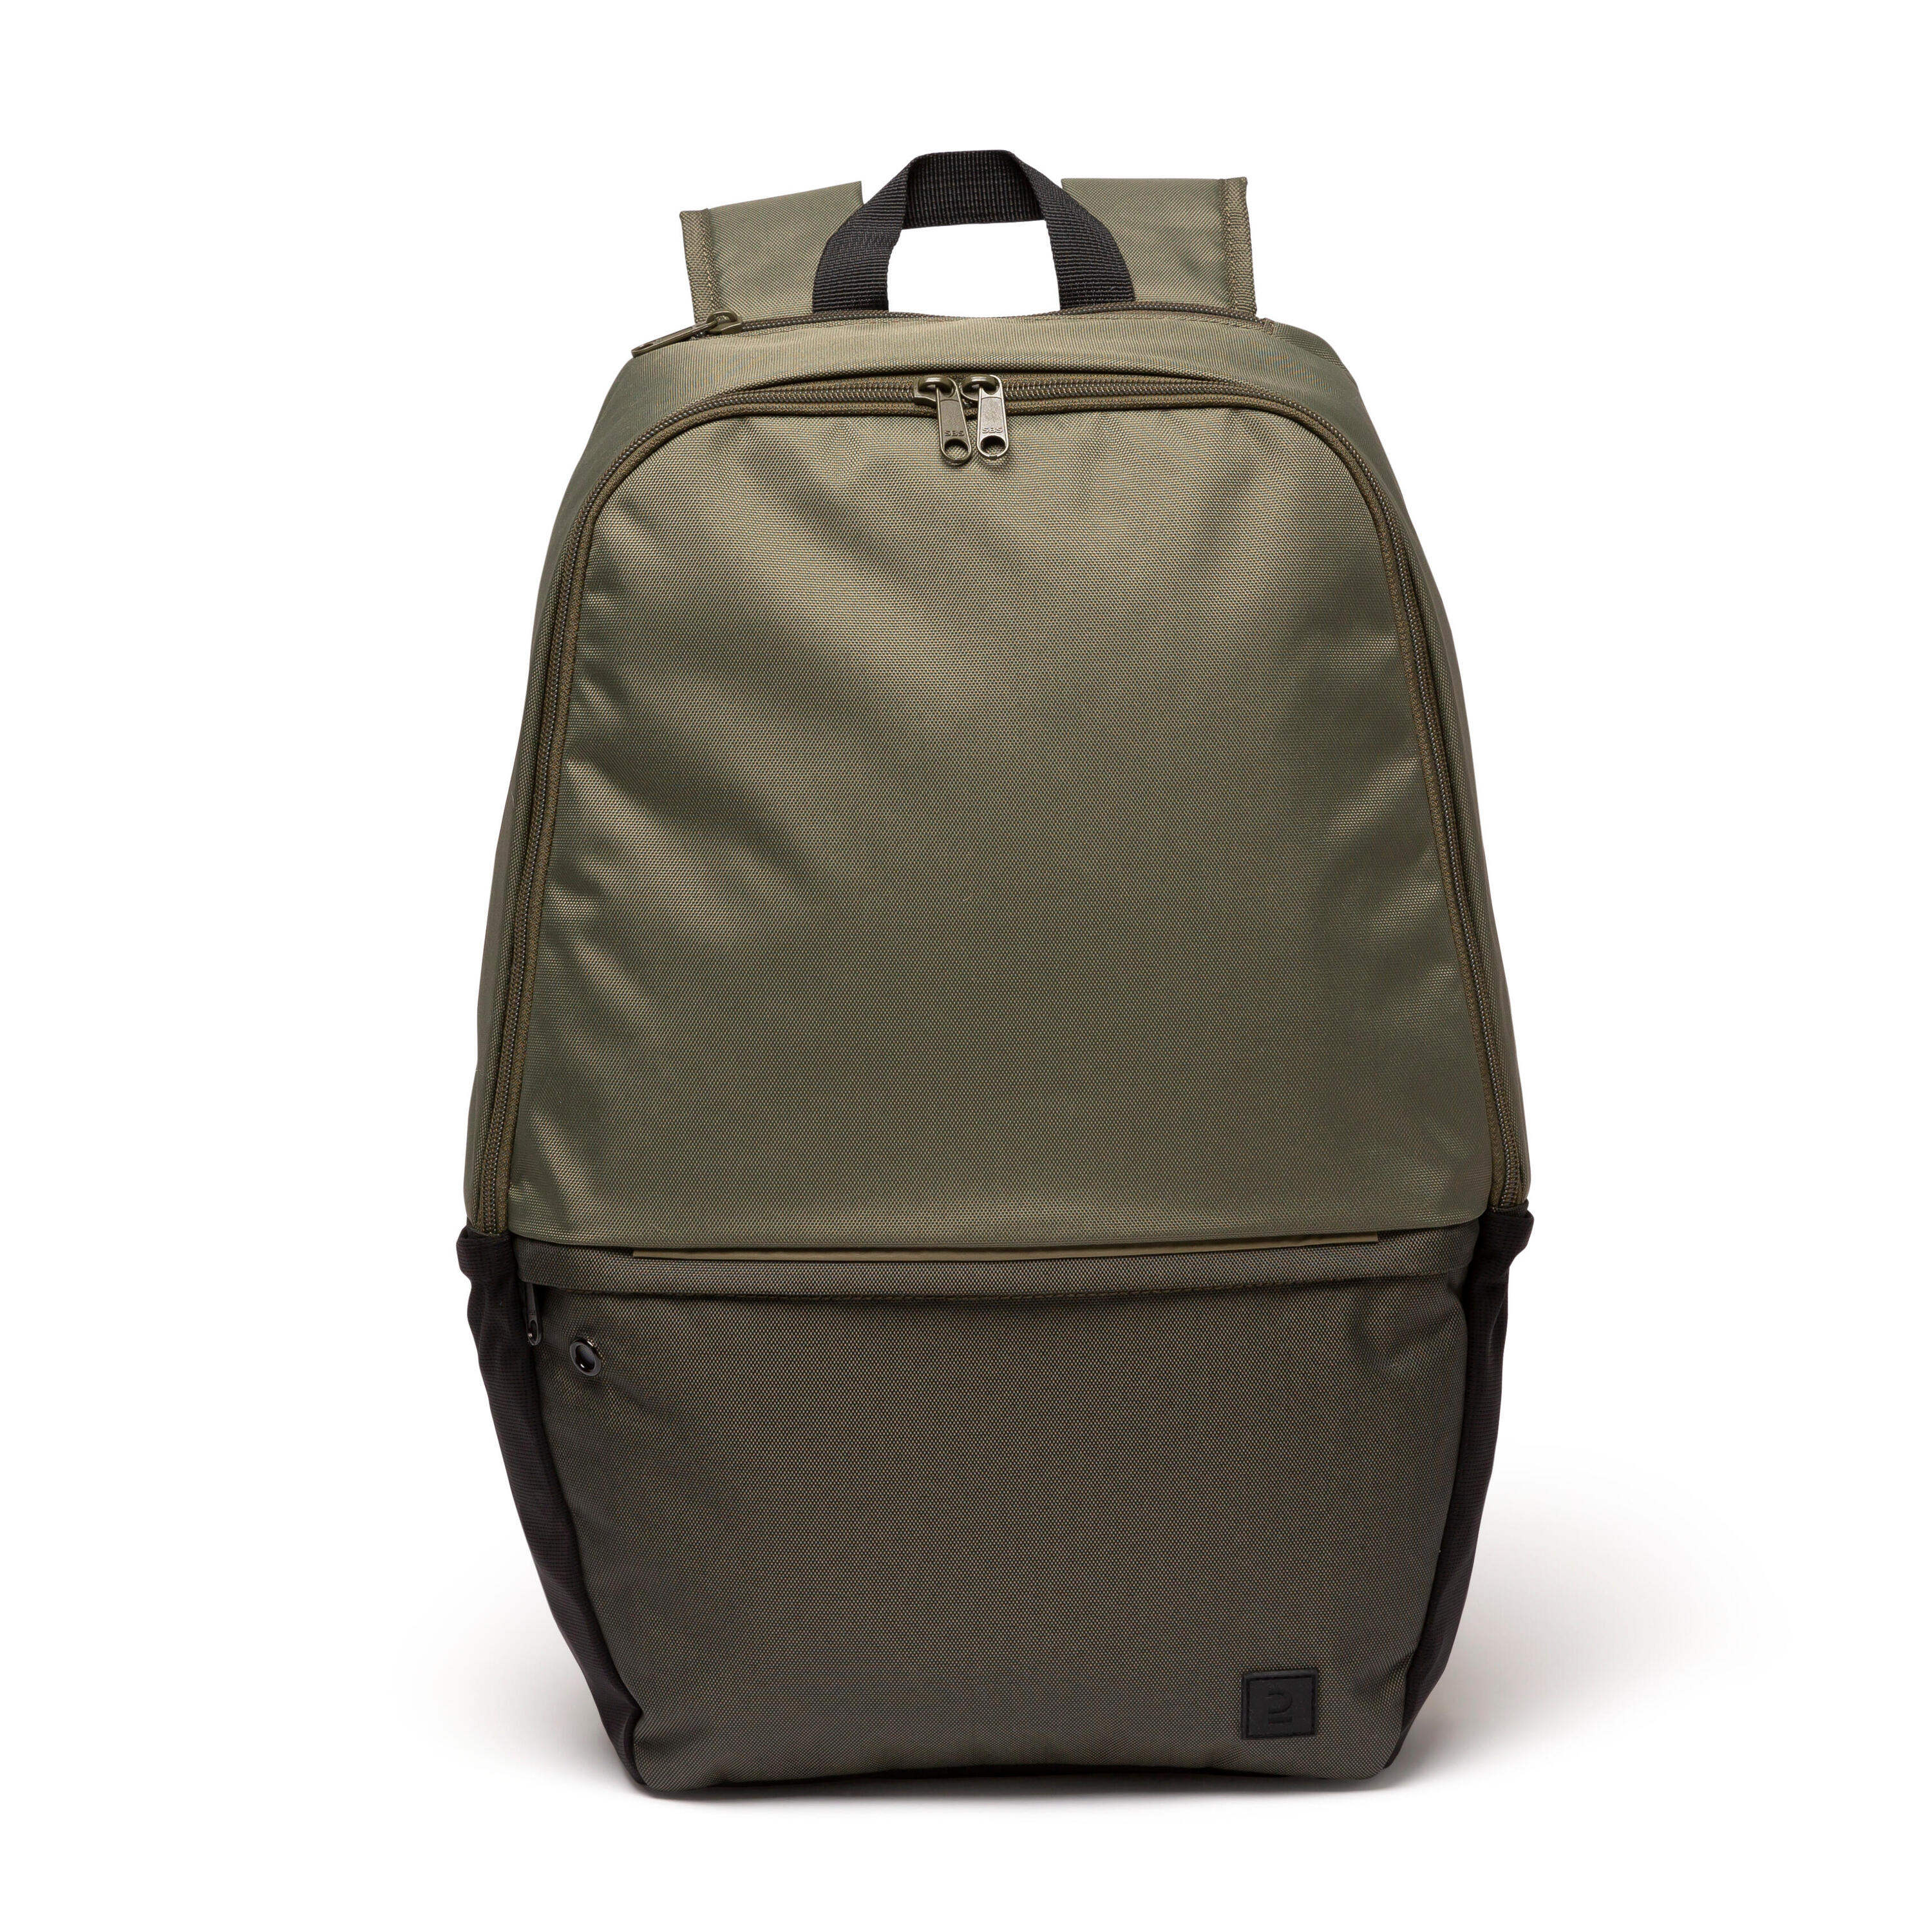 24L Backpack Essential - Khaki 2/9